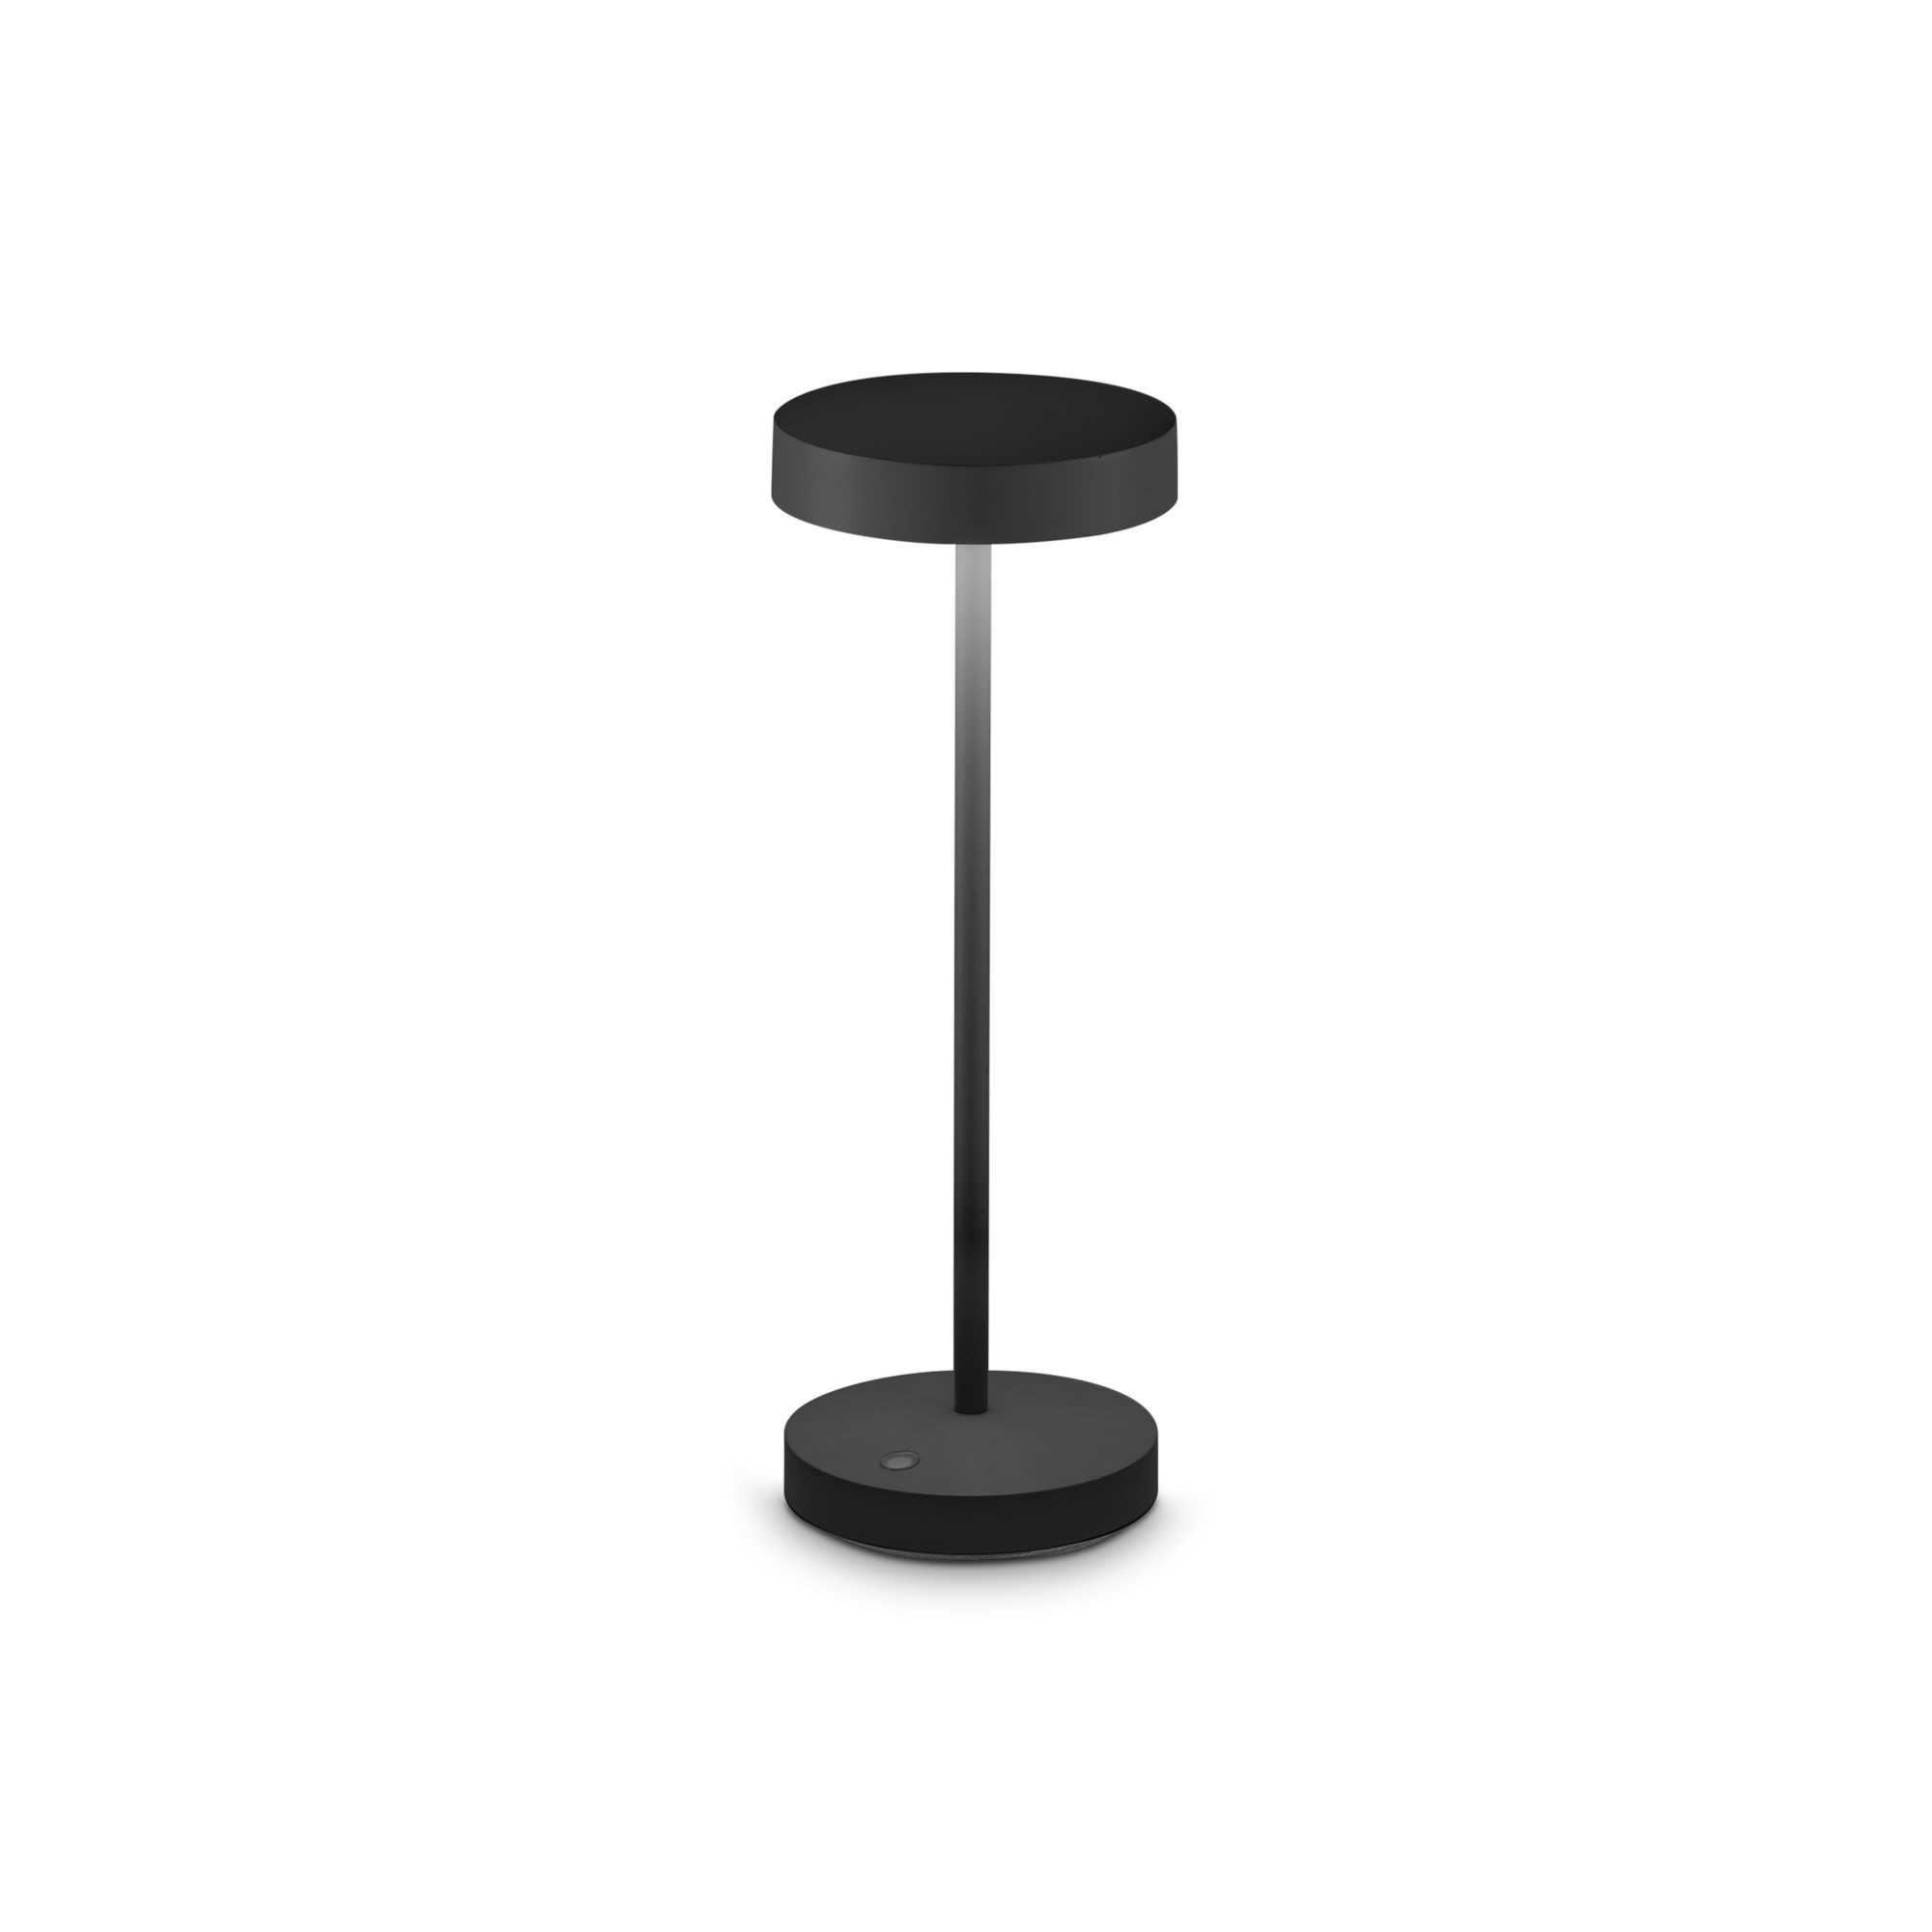 AD hotelska oprema Vanjska stolna lampa Toffee tl- Crne boje slika proizvoda